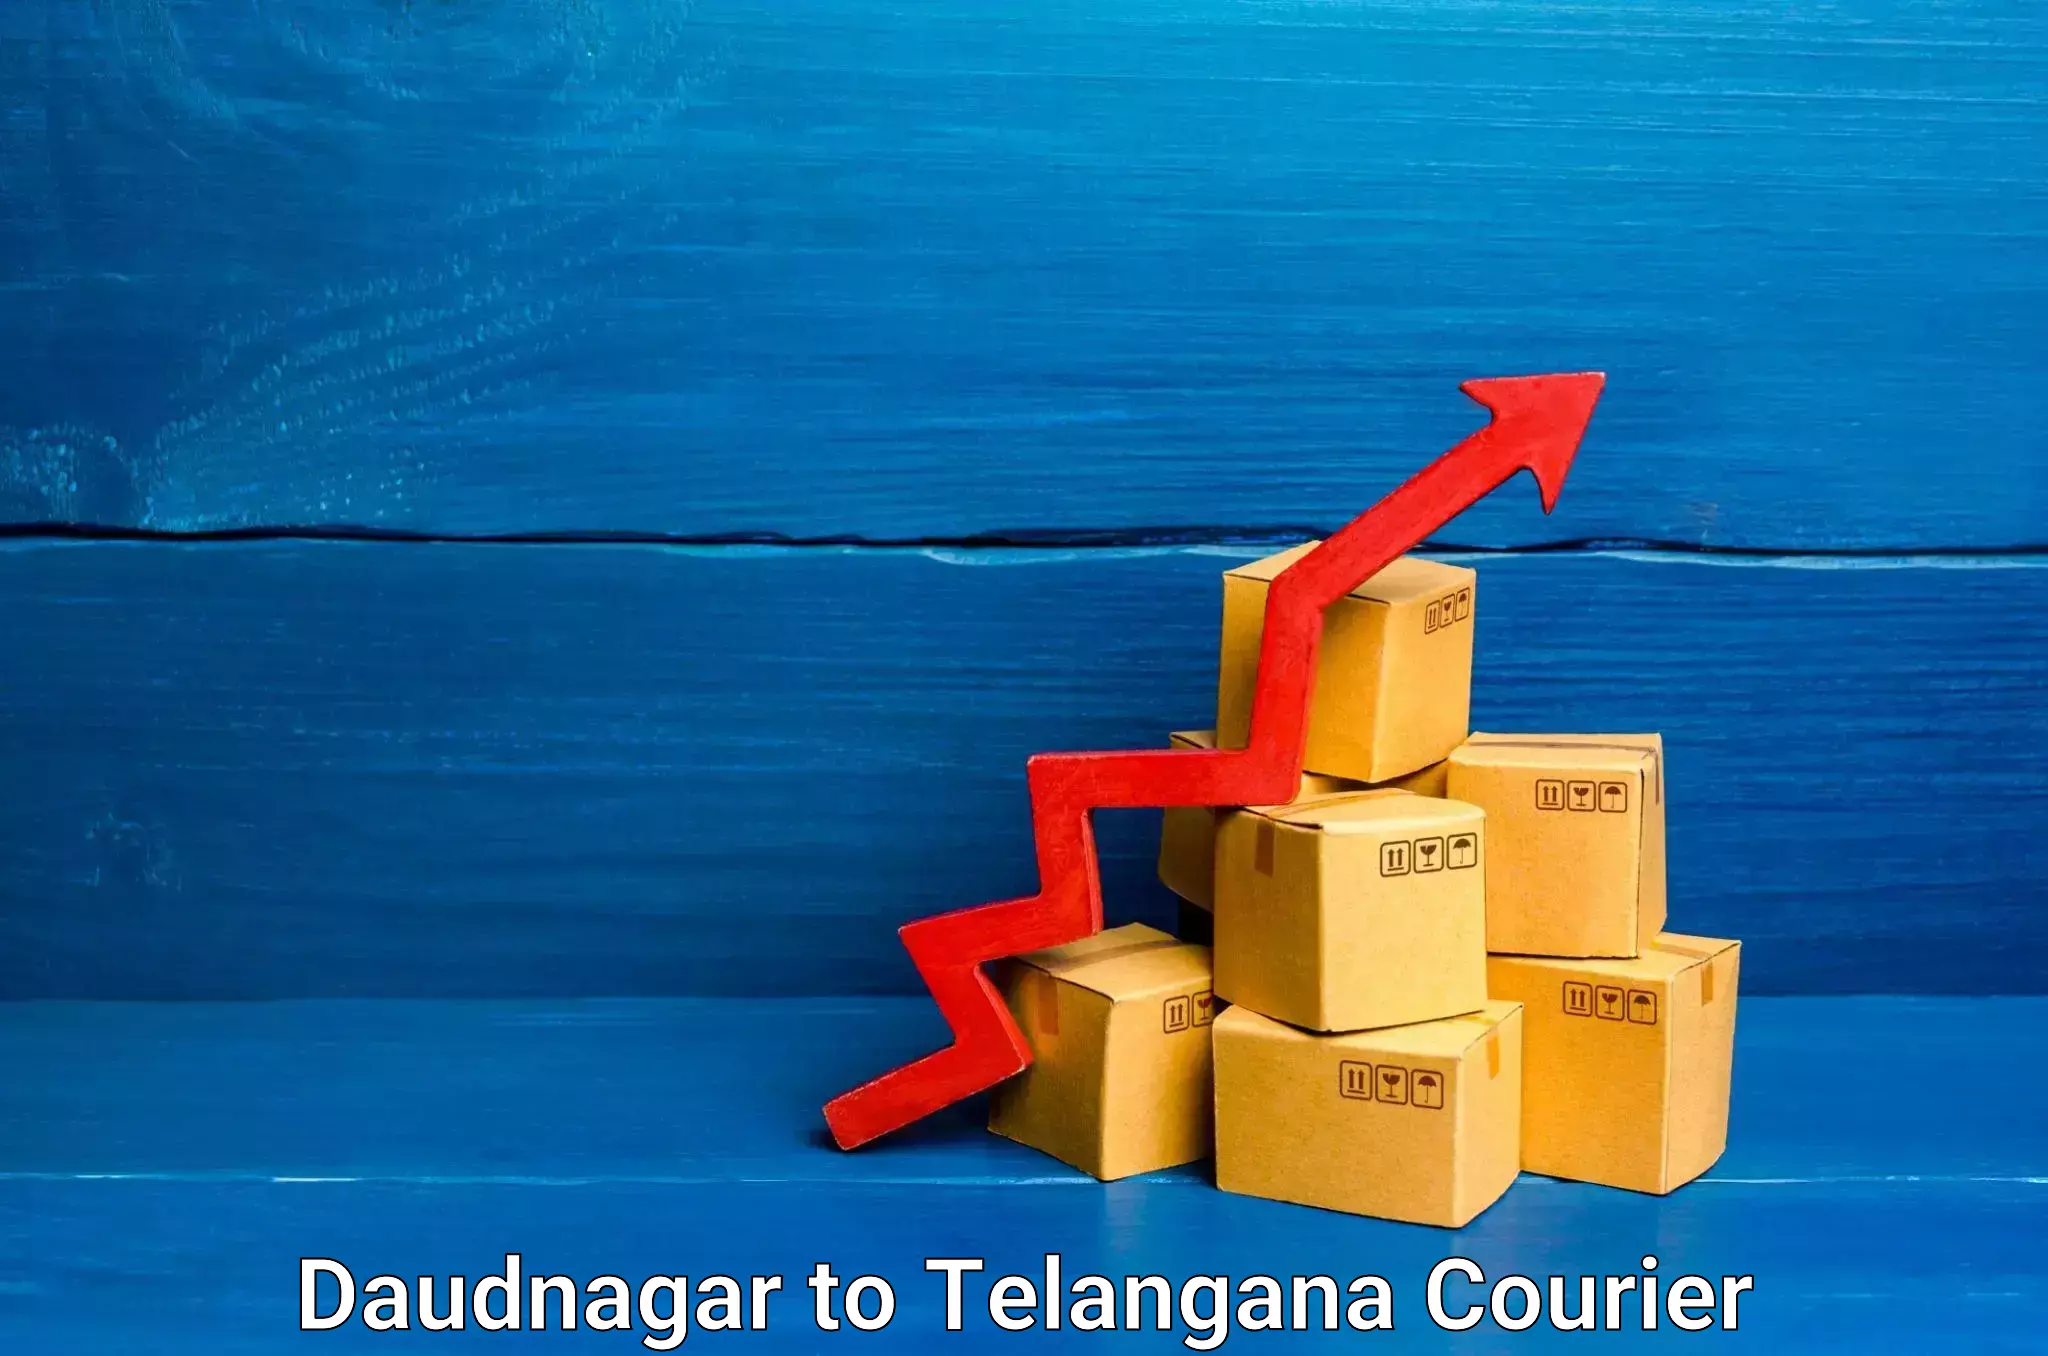 Professional furniture movers in Daudnagar to Secunderabad